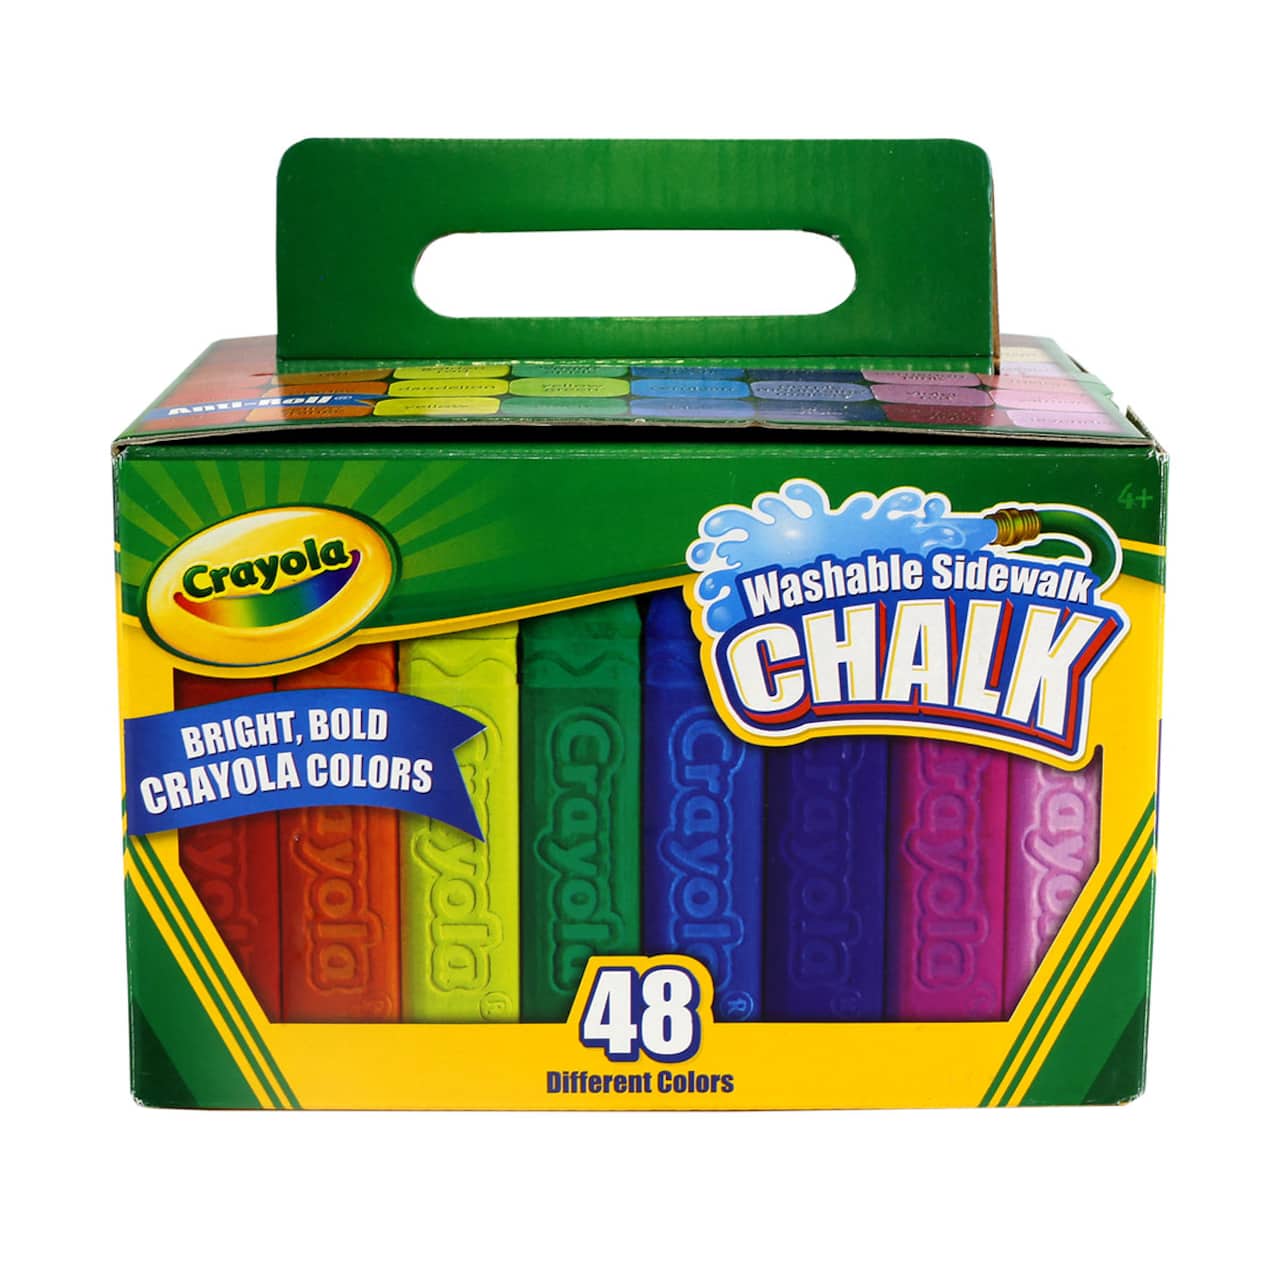 Crayola Washable Sidewalk Chalk, 48ct.